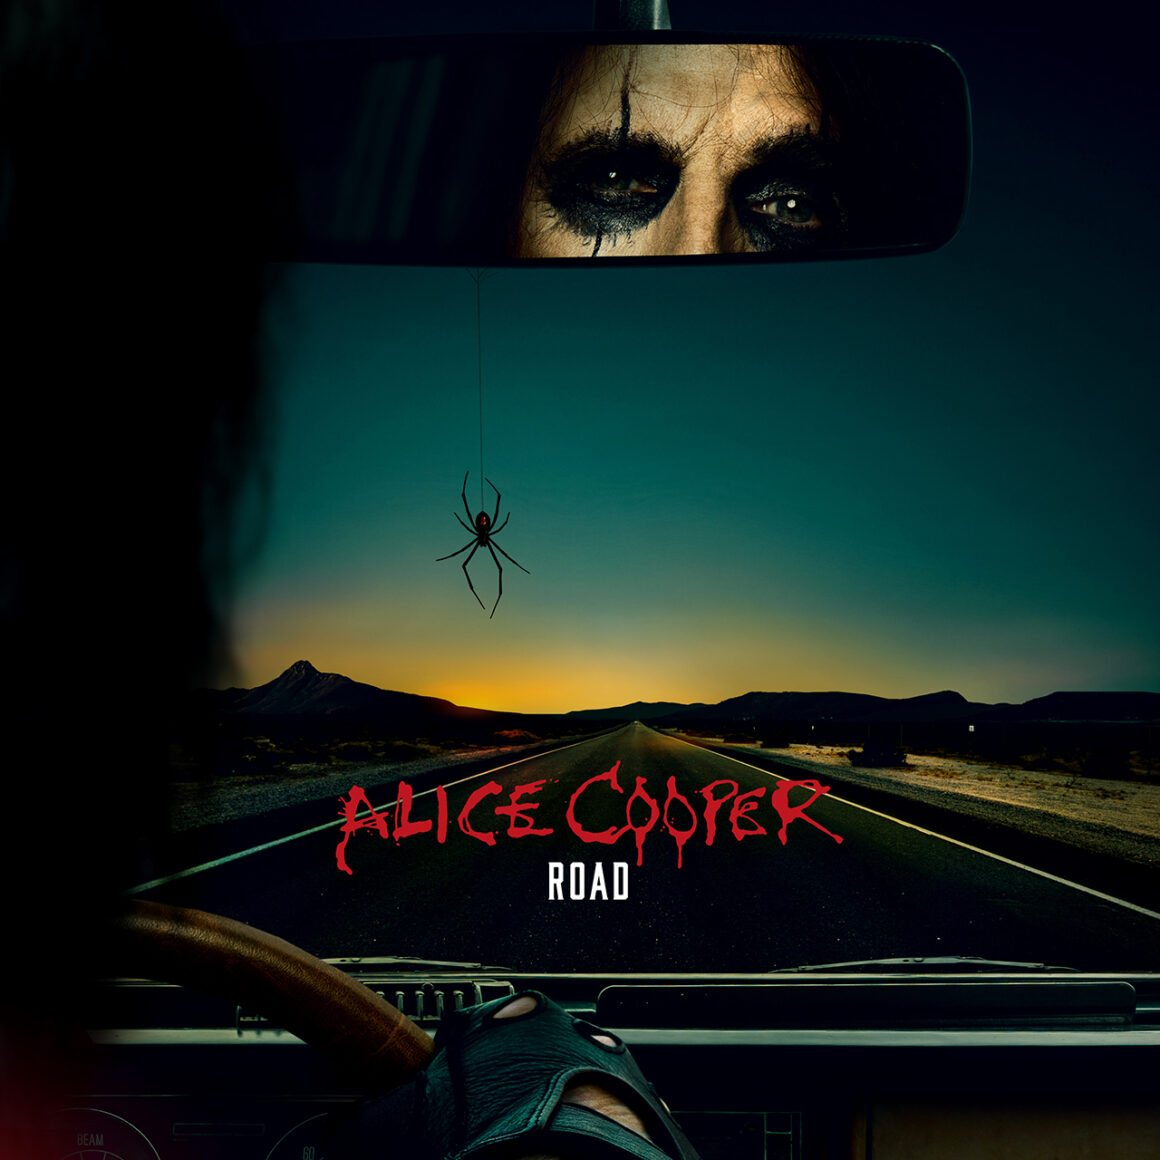 Alice Cooper, Road artwork, @alicecooper